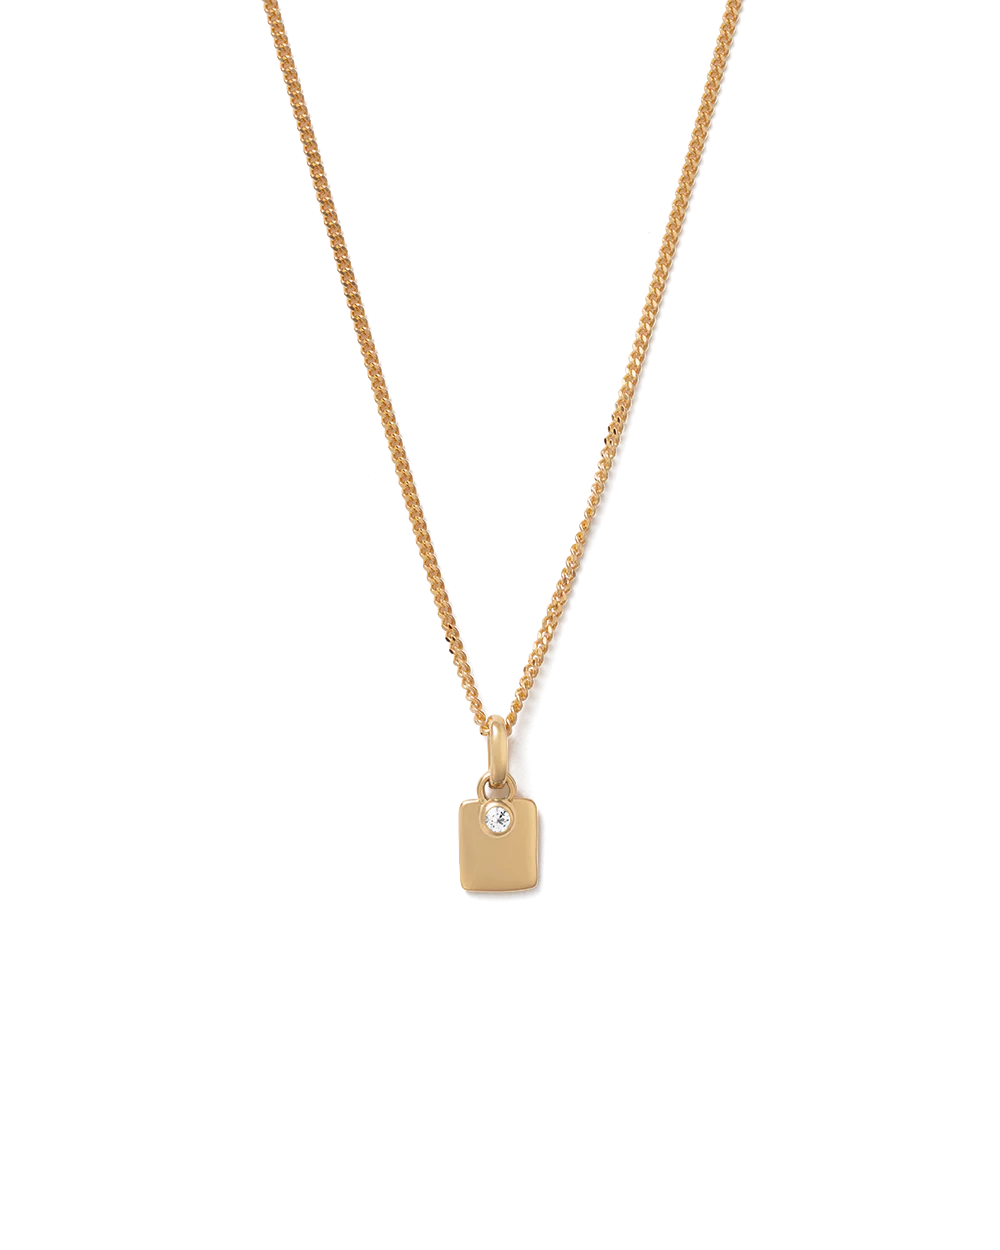 April Birthstone Necklace 18K GOLD VERMEIL/ WHITE TOPAZ